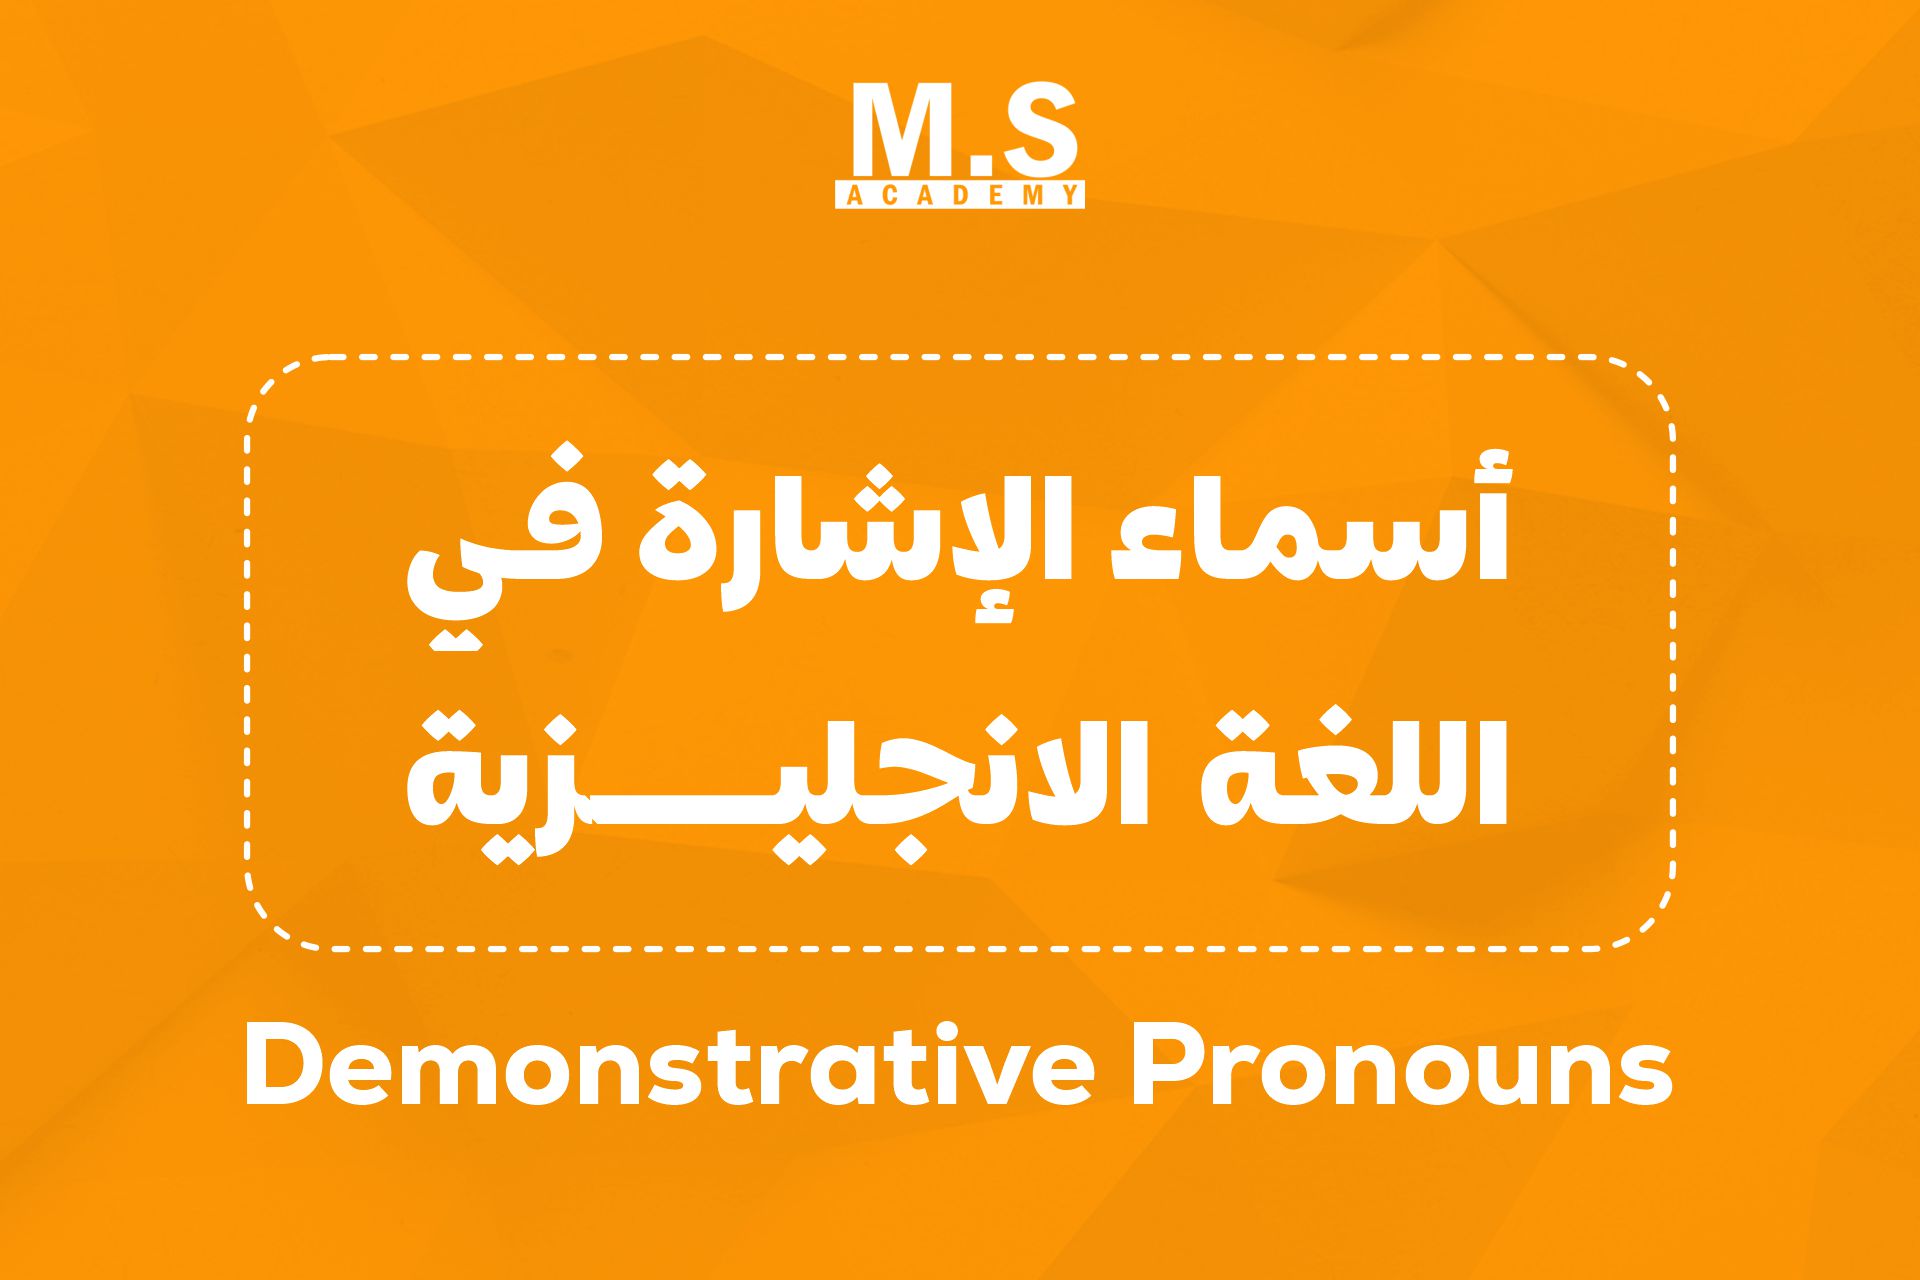 demonstrative-pronouns-m-s